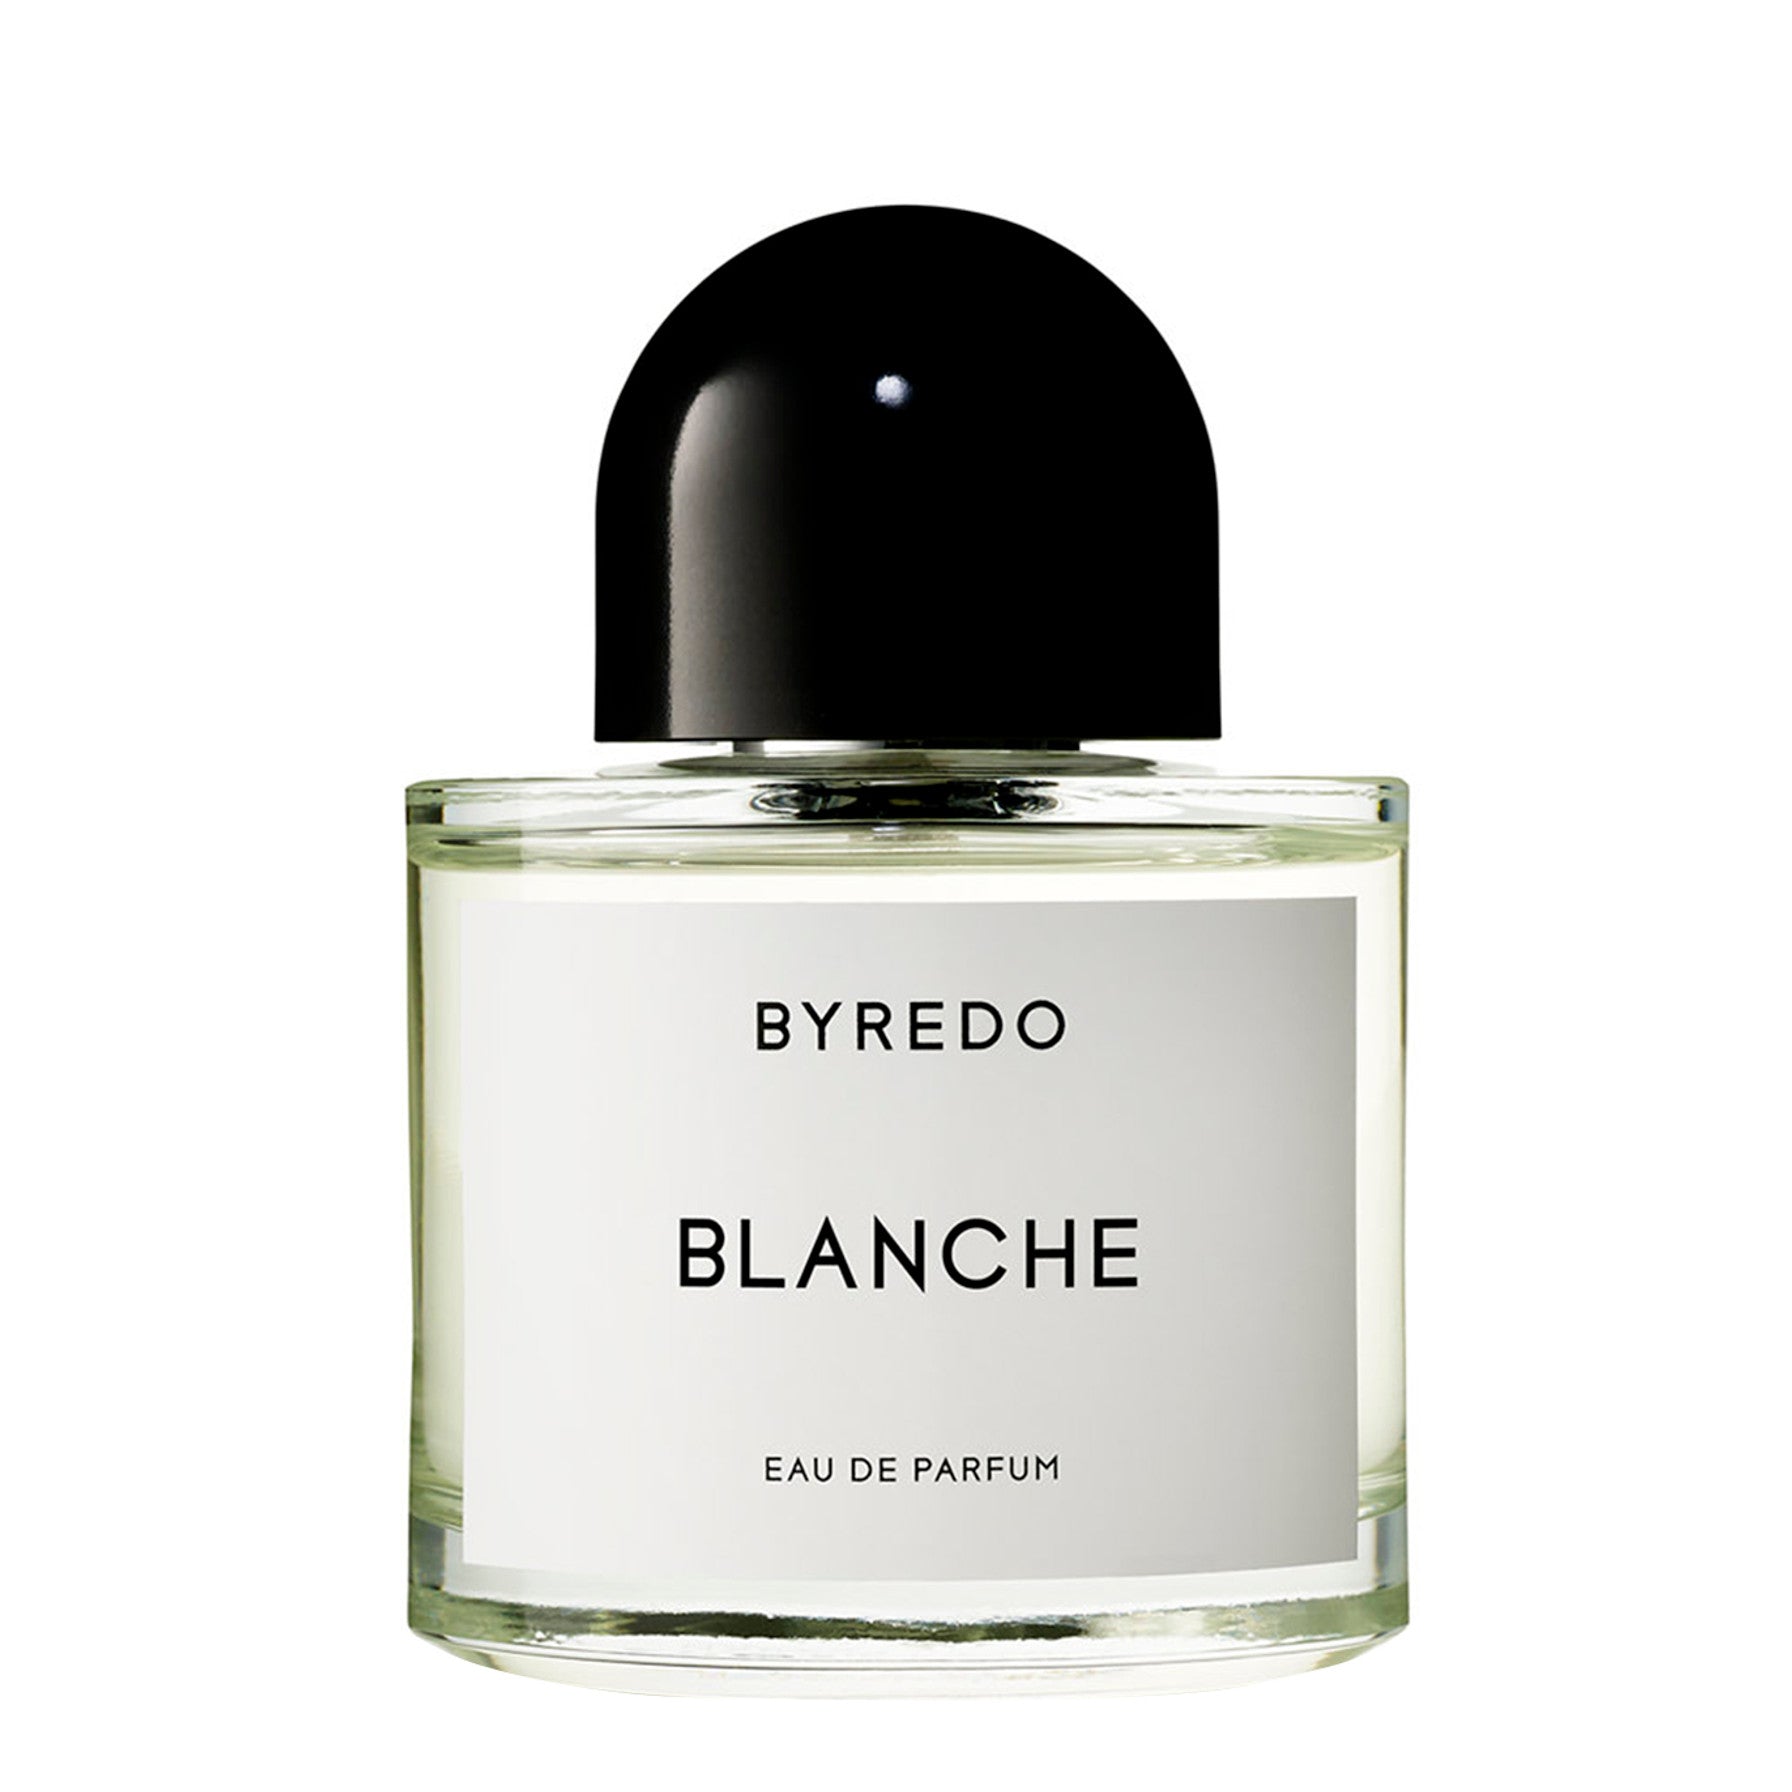 Byredo - “Blanche” Eau de Parfum 100ml view 1